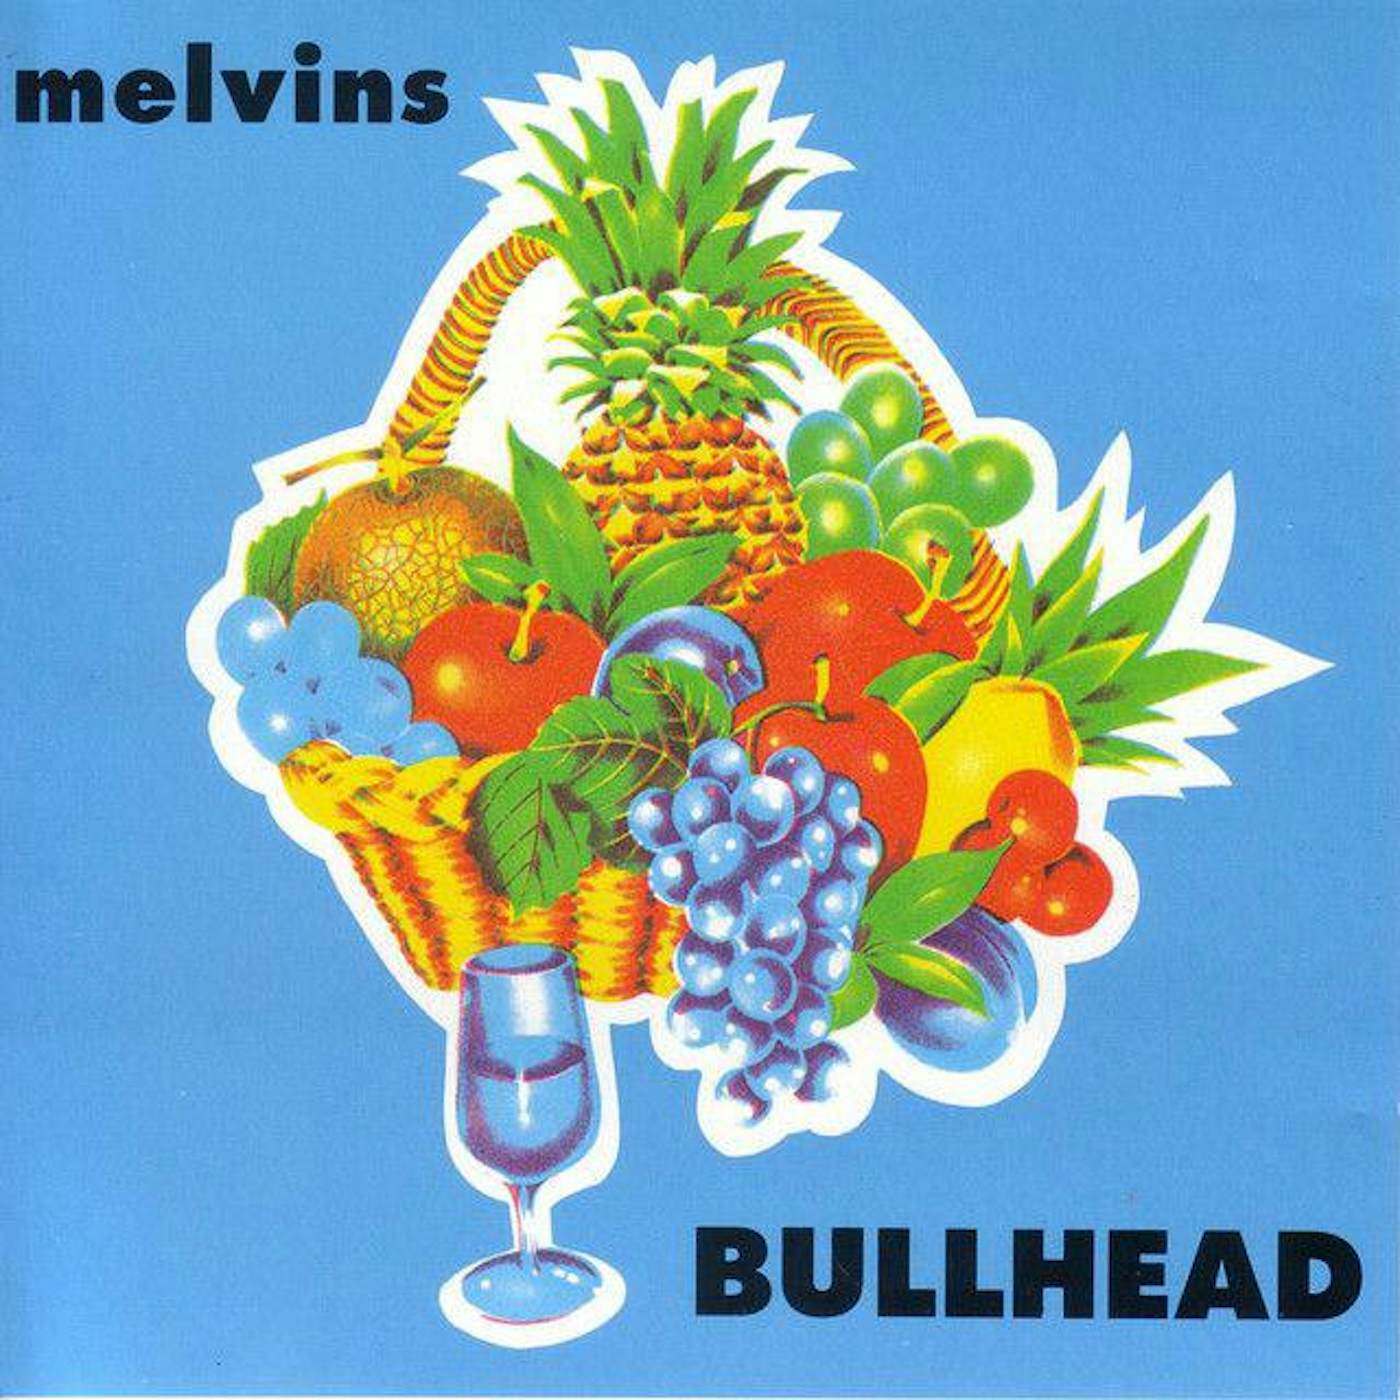 Melvins Bullhead Vinyl Record